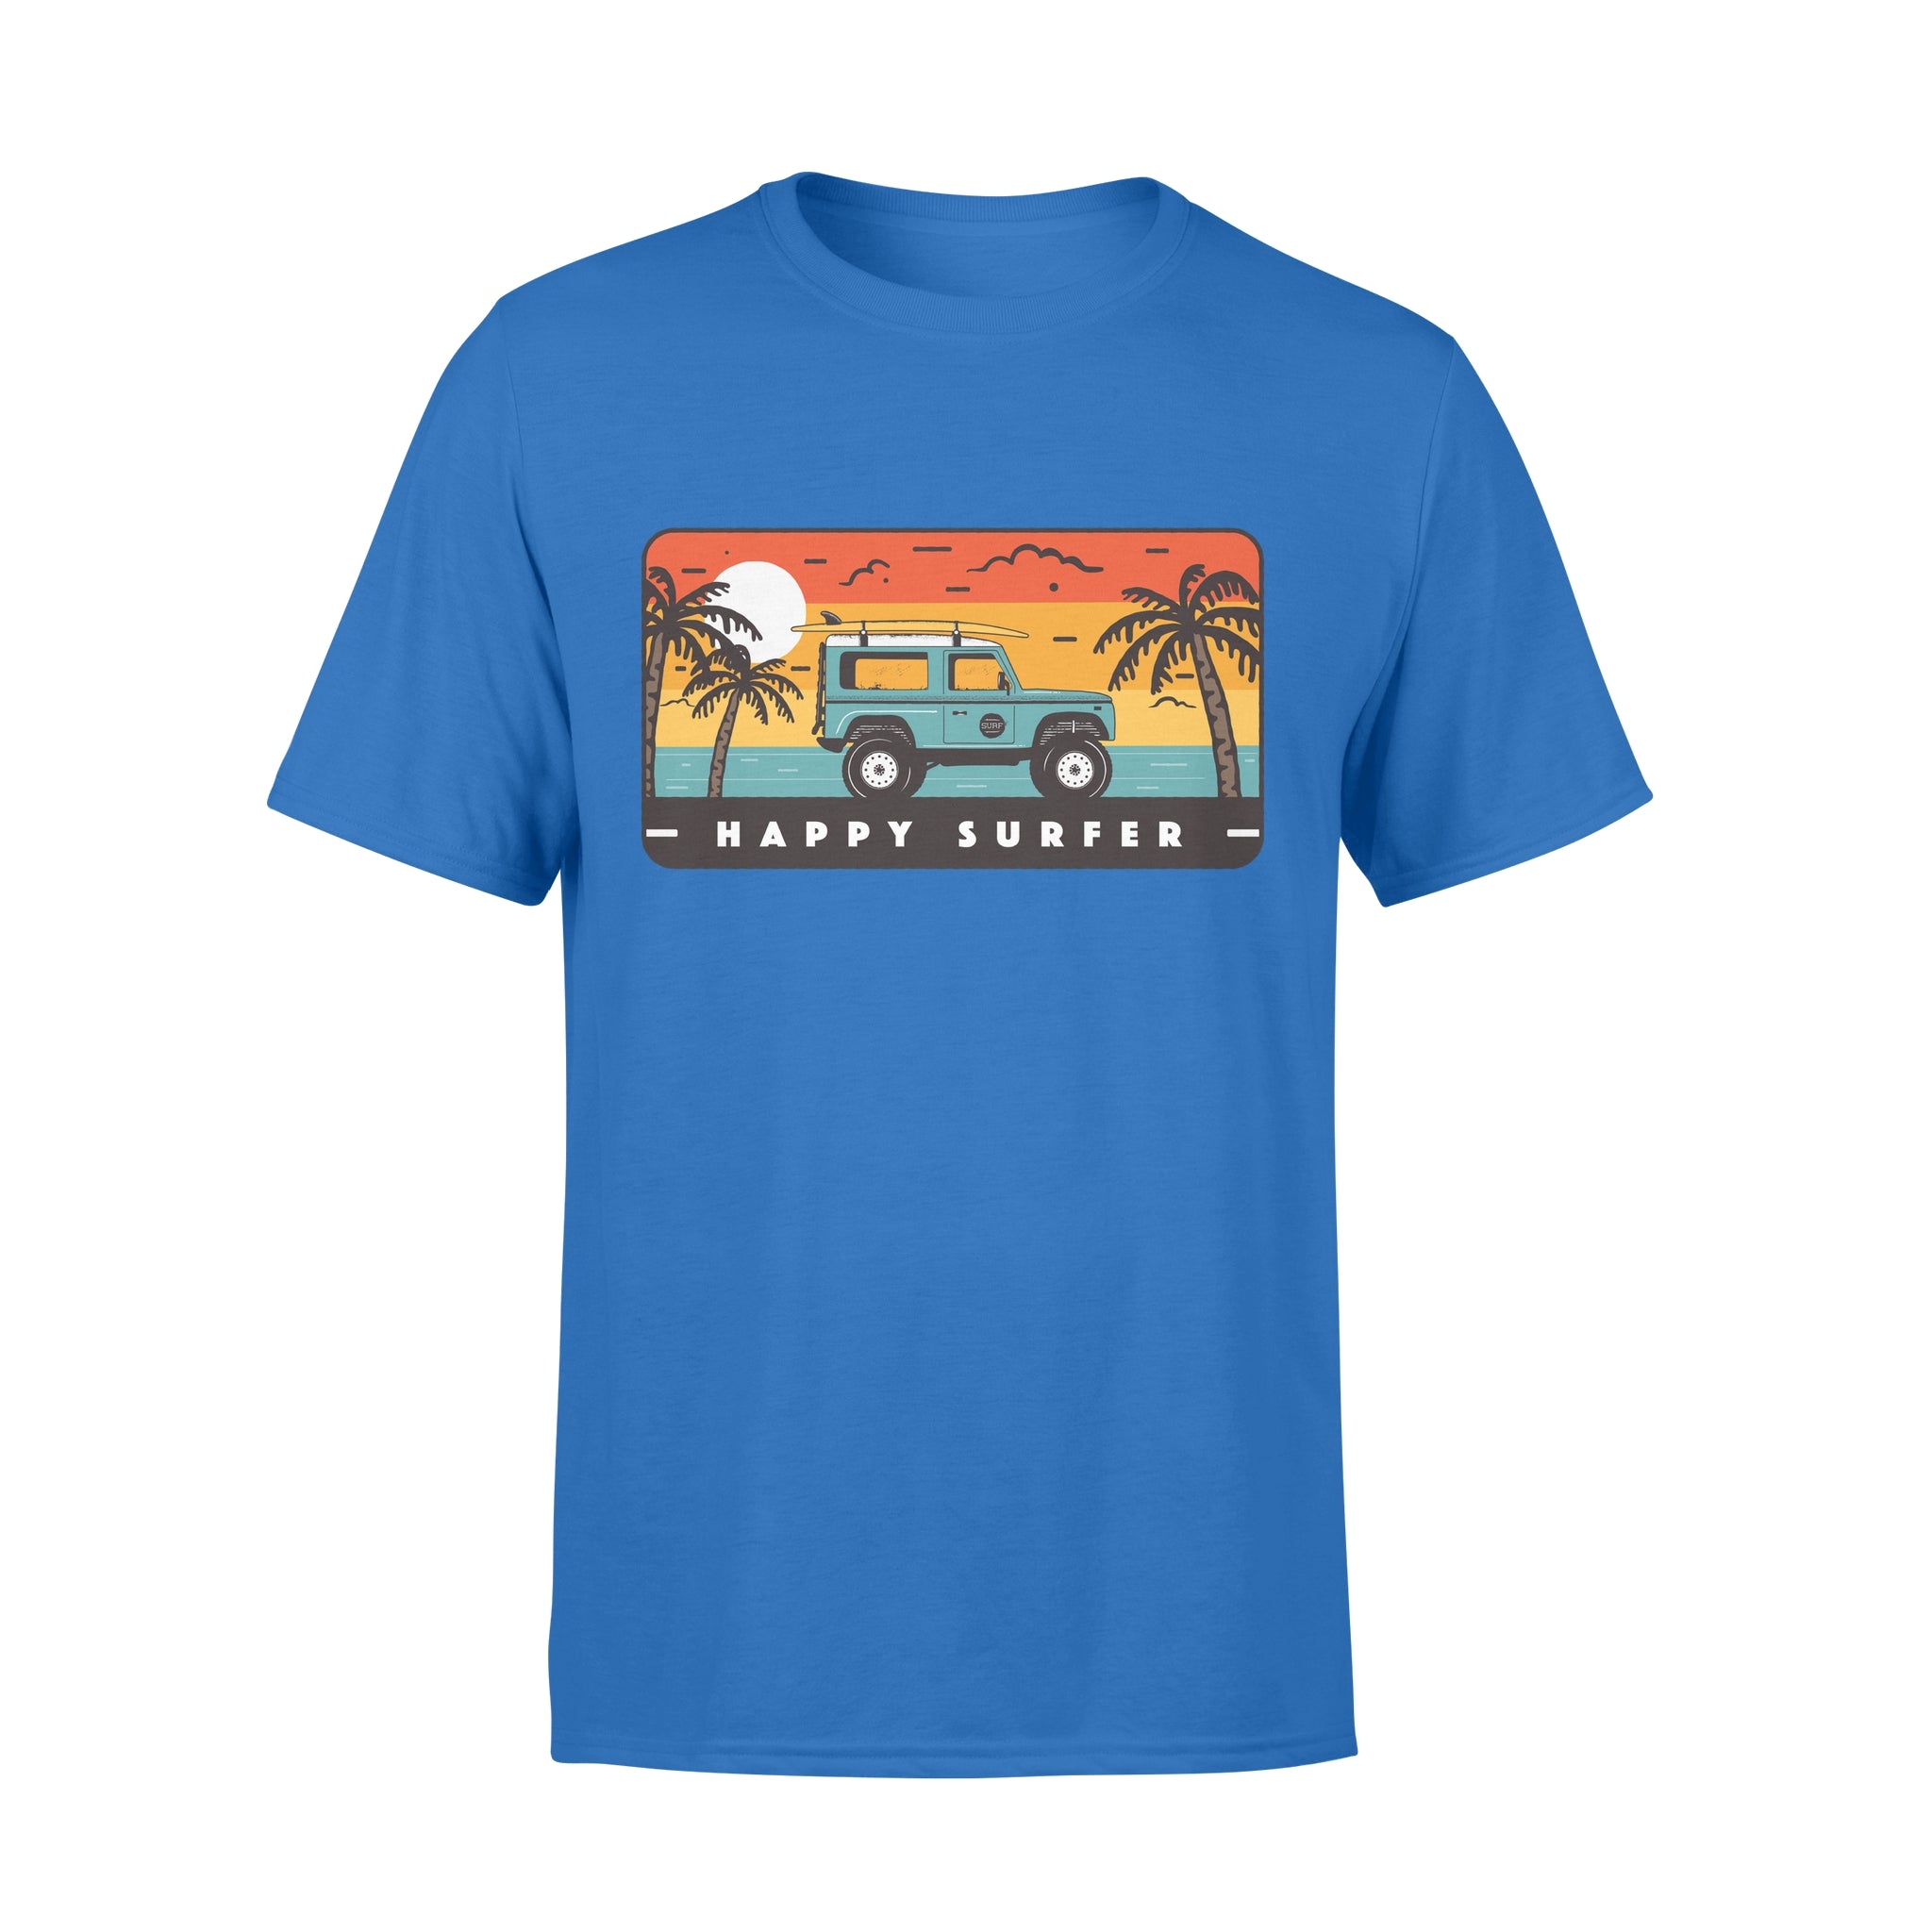 Happy Surfer - T-shirt